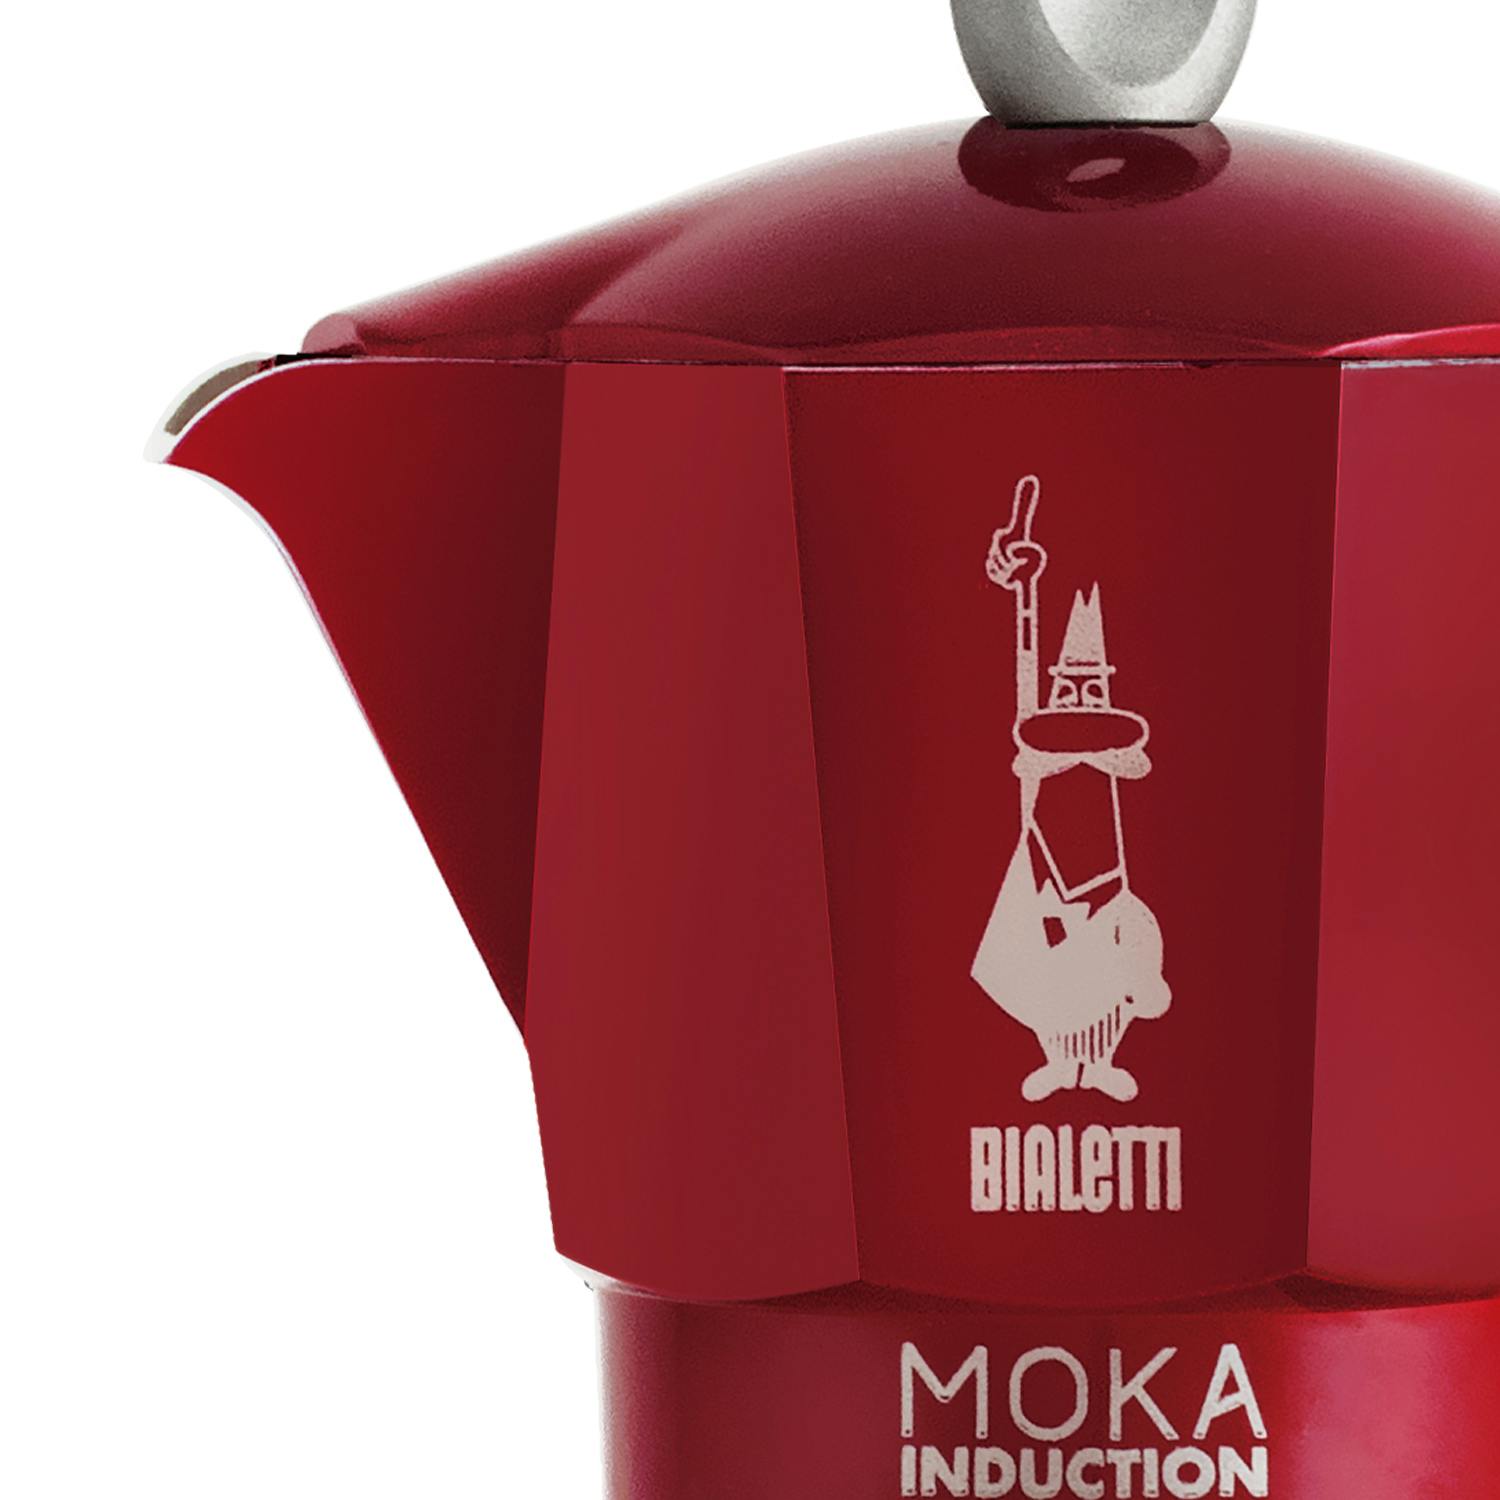  Bialetti - Moka Induction, Moka Pot, apto para todo